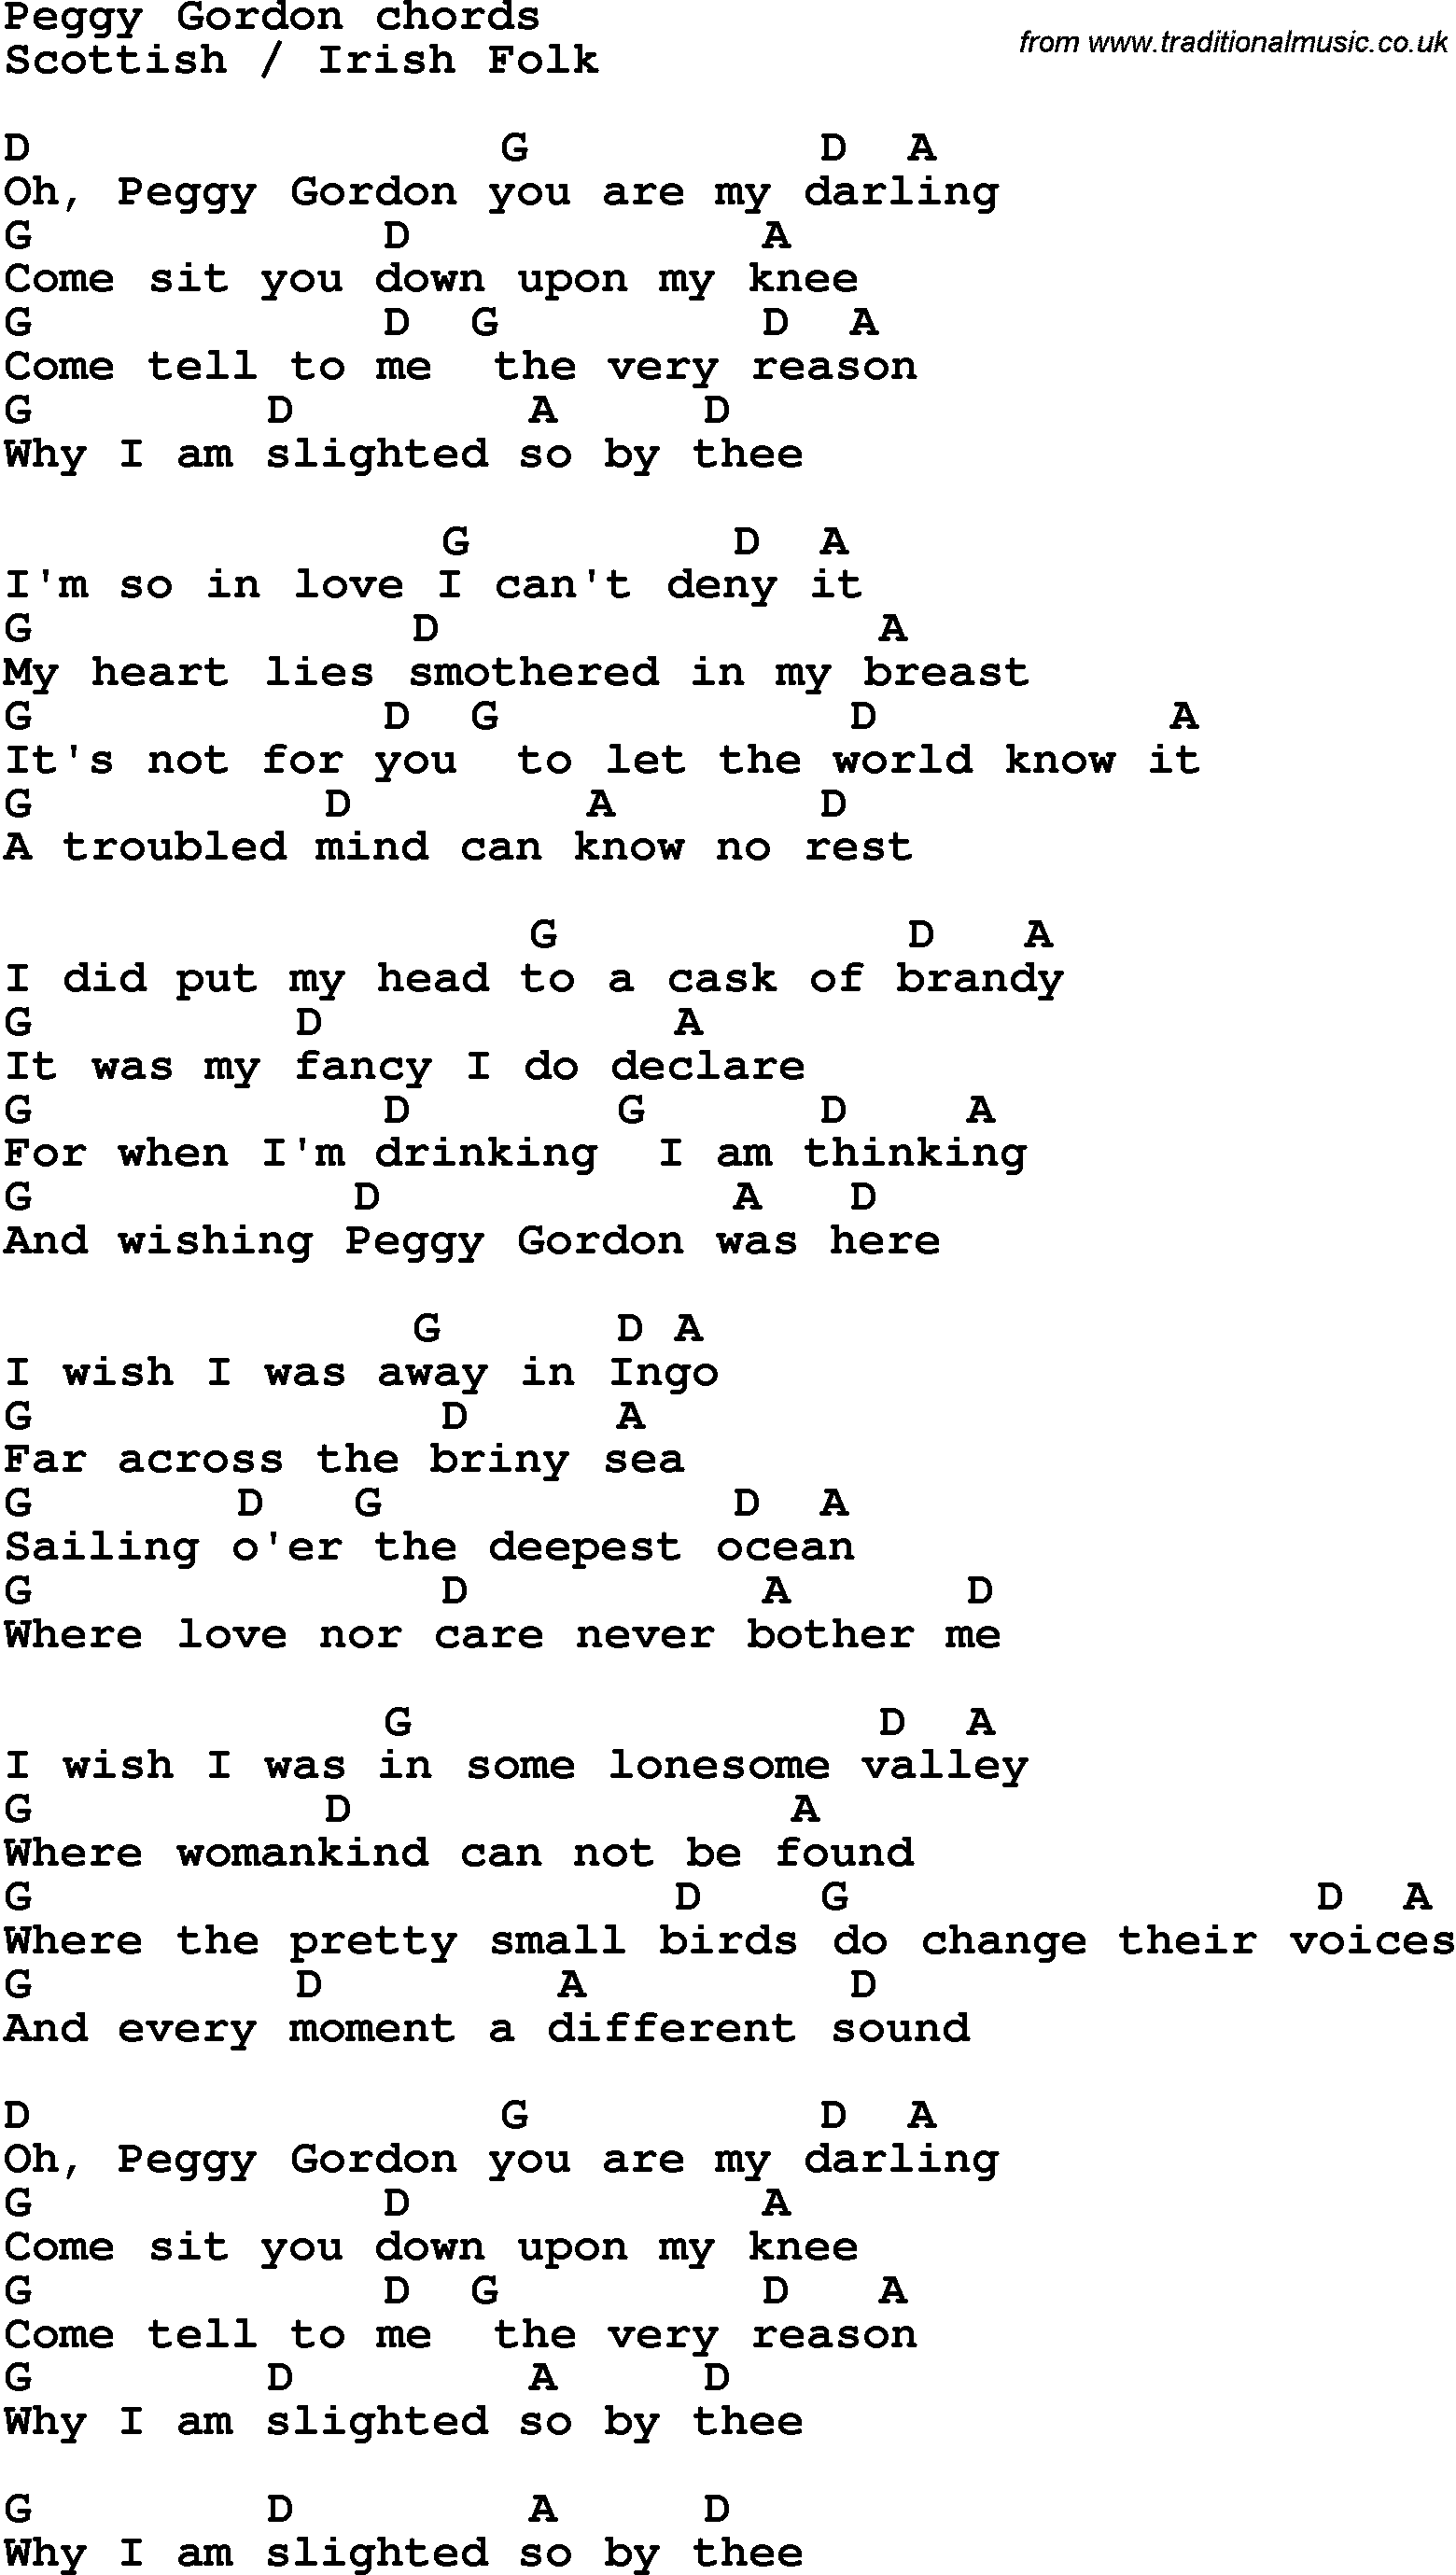 Song Lyrics with guitar chords for Peggy Gordon